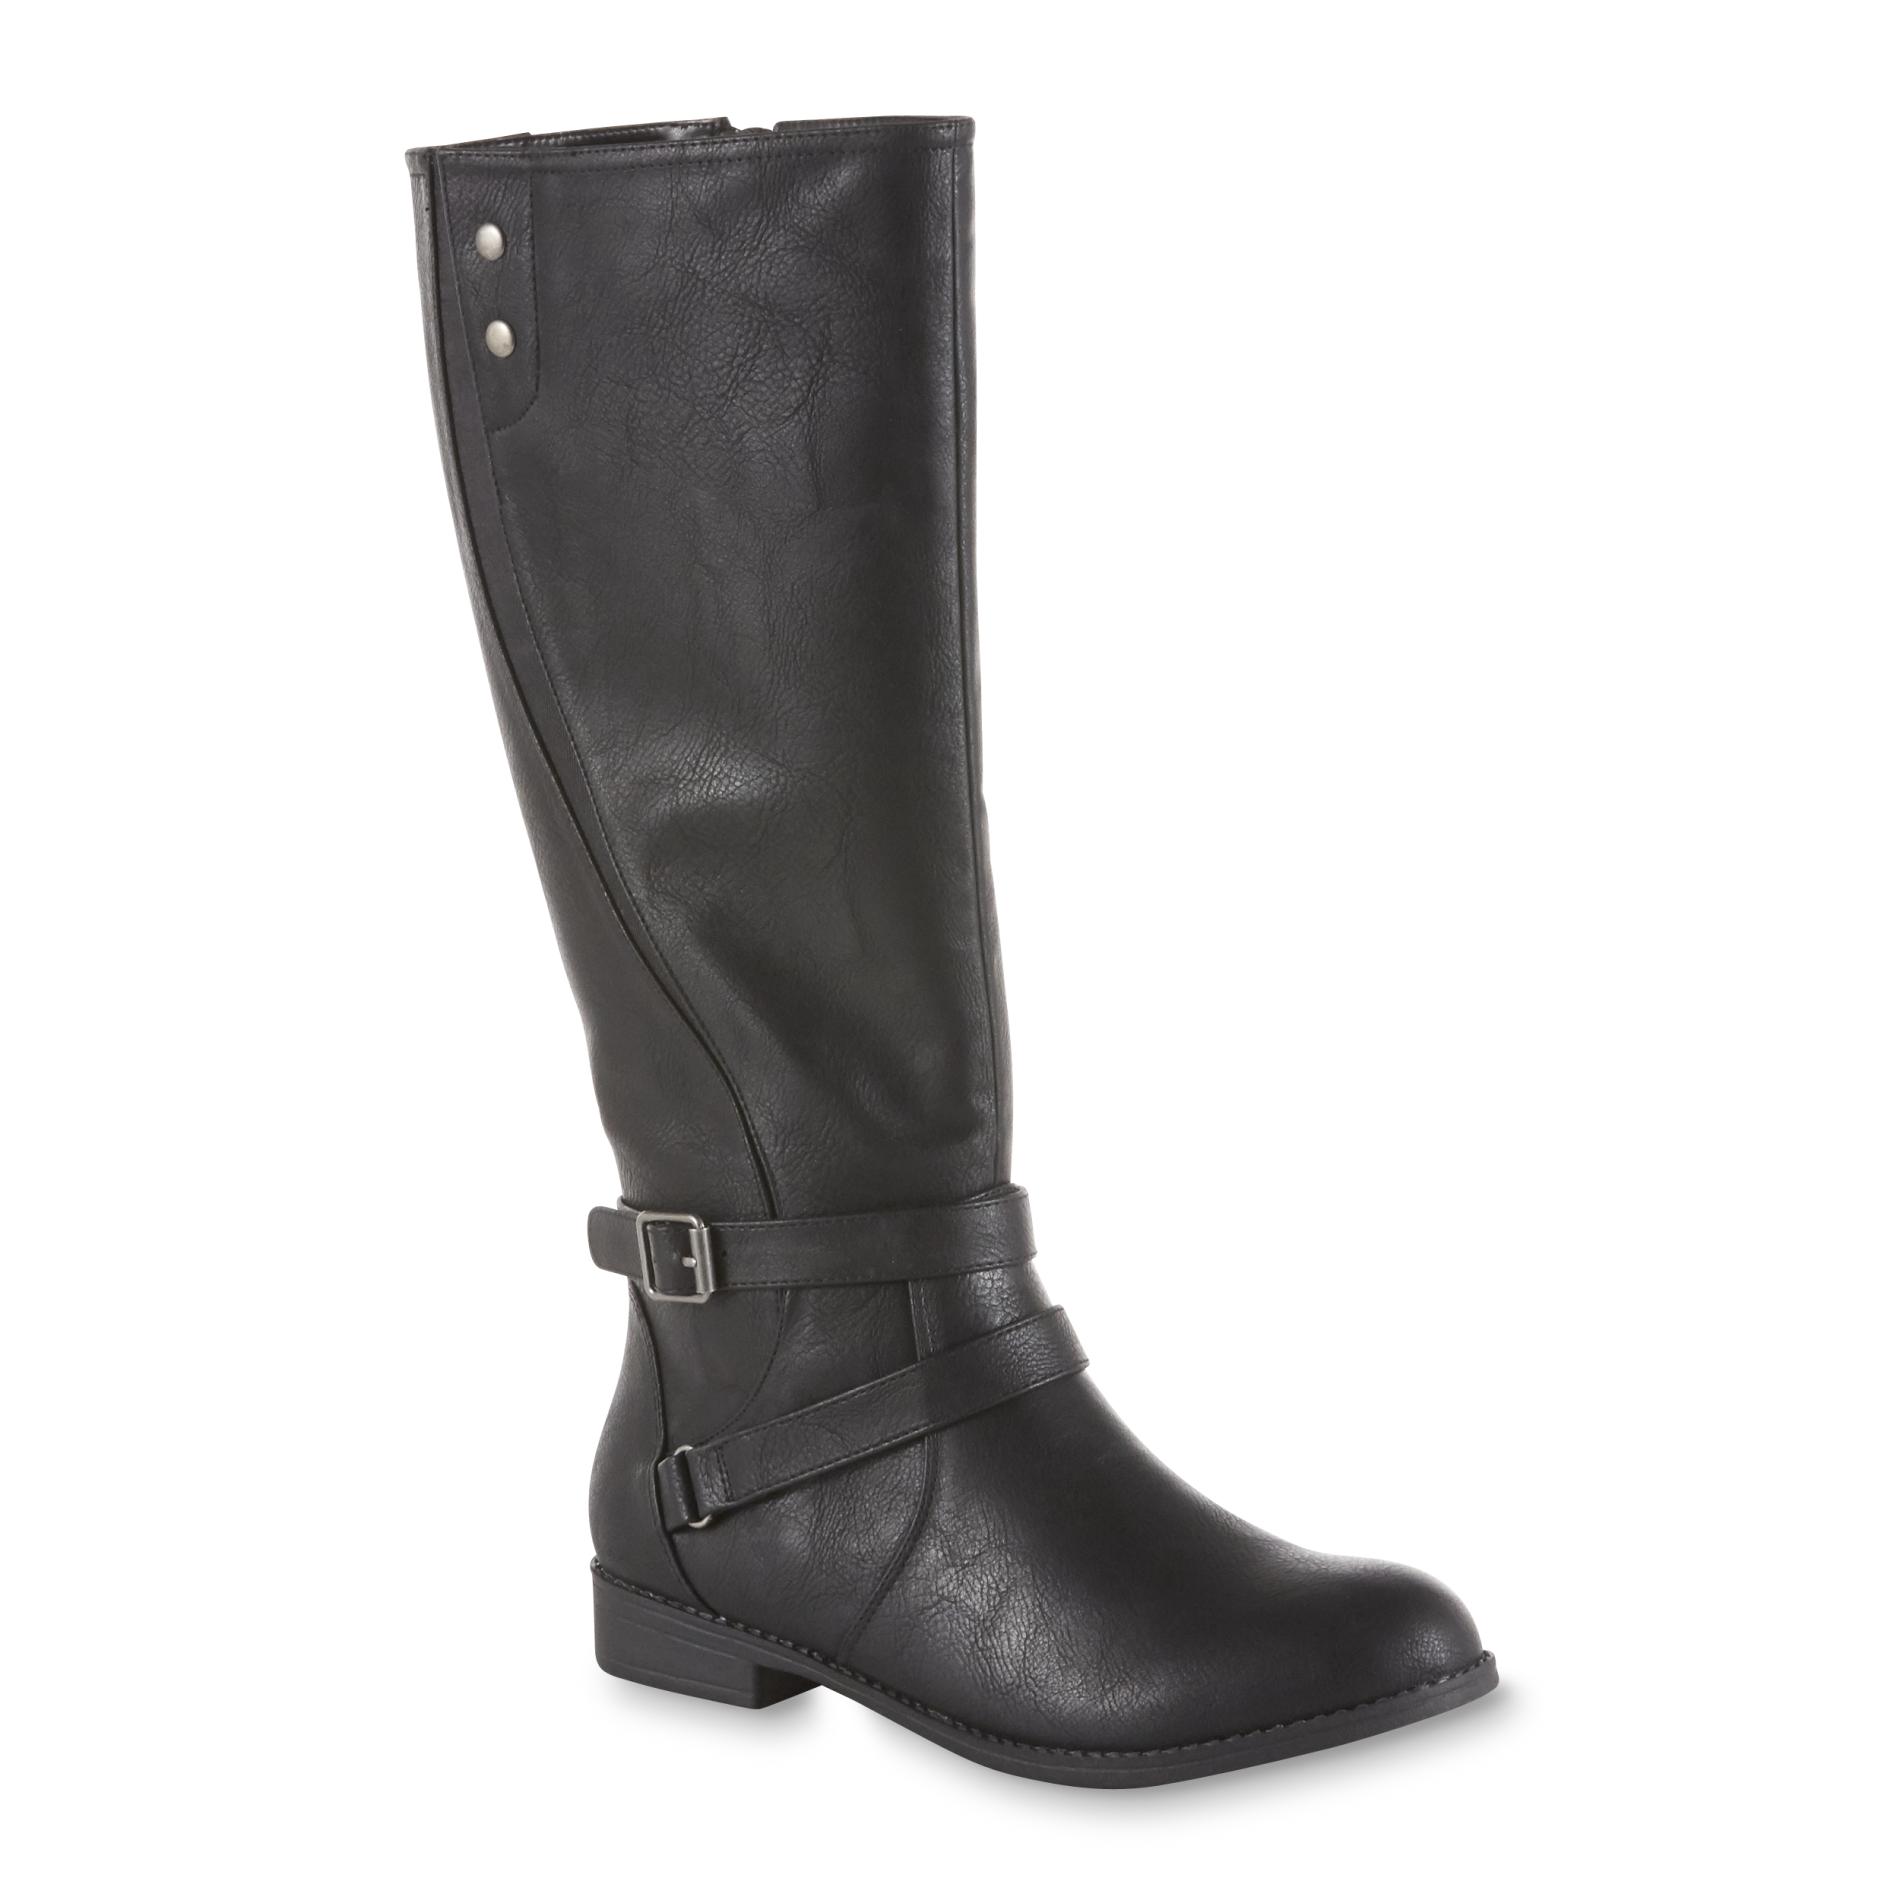 Roebuck & Co. Women's Cara Knee-High Boot - Black